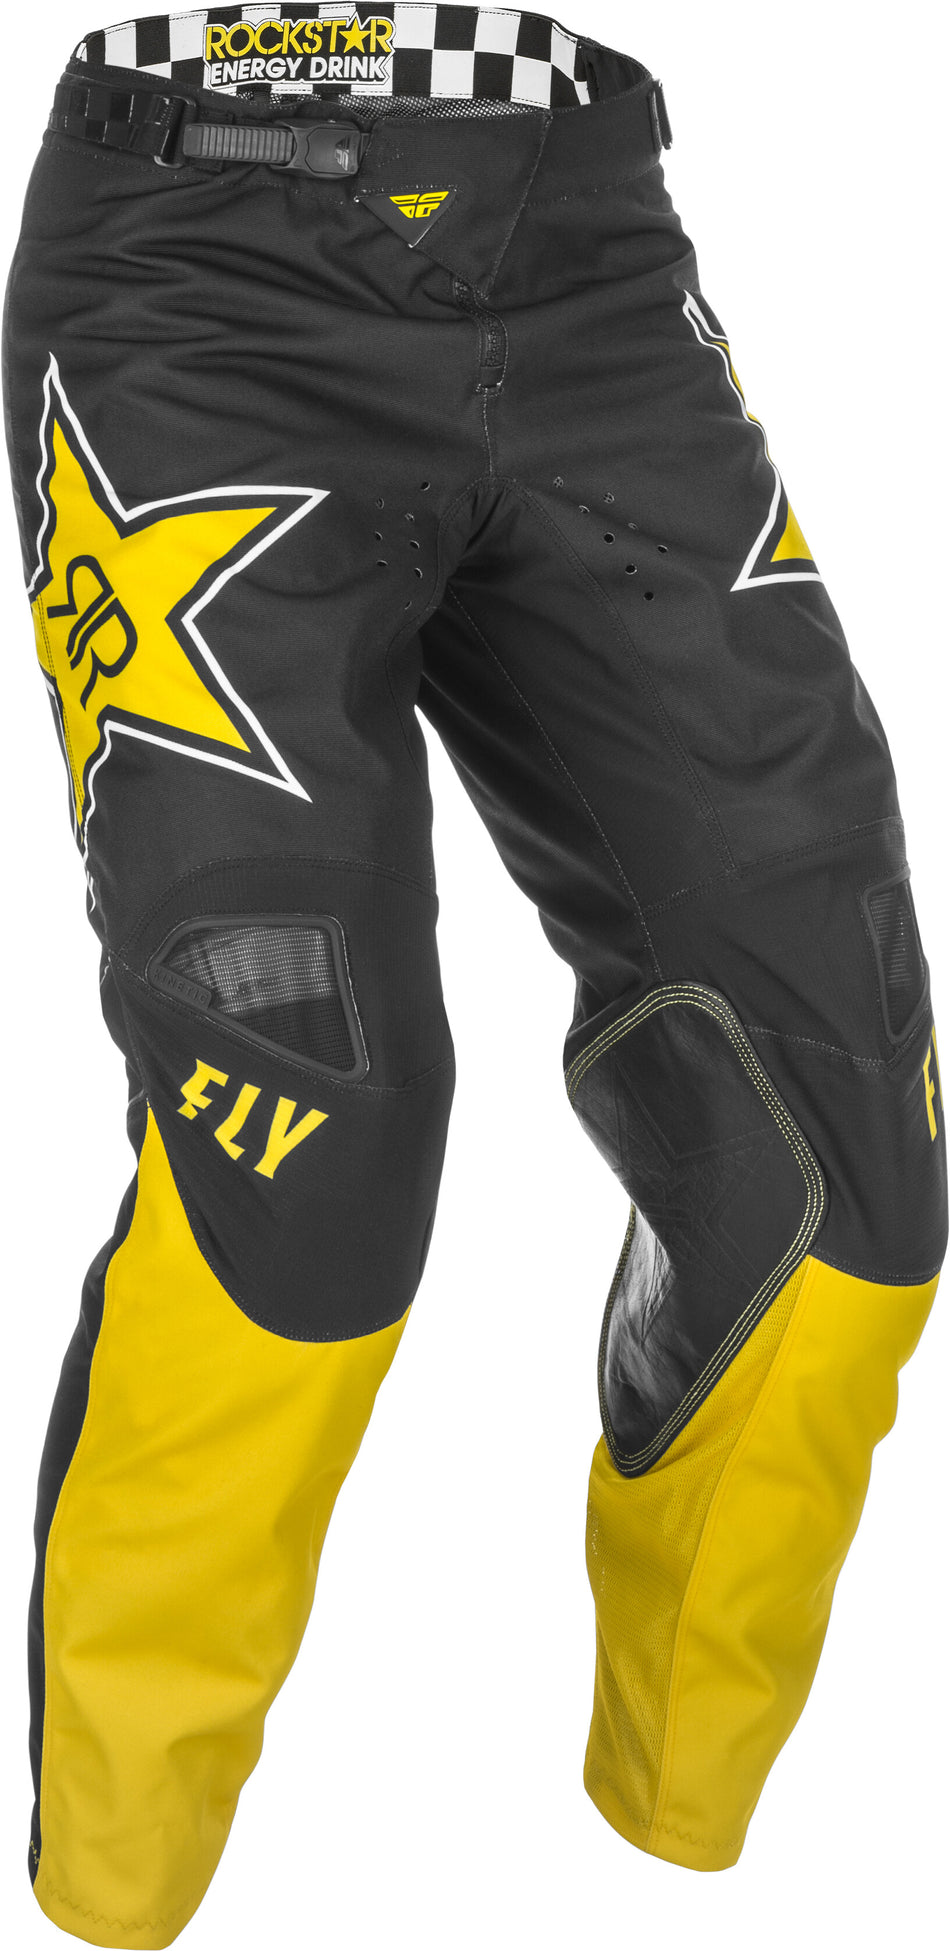 FLY RACING Kinetic Rockstar Pants Yellow/Black Sz 28 374-02328